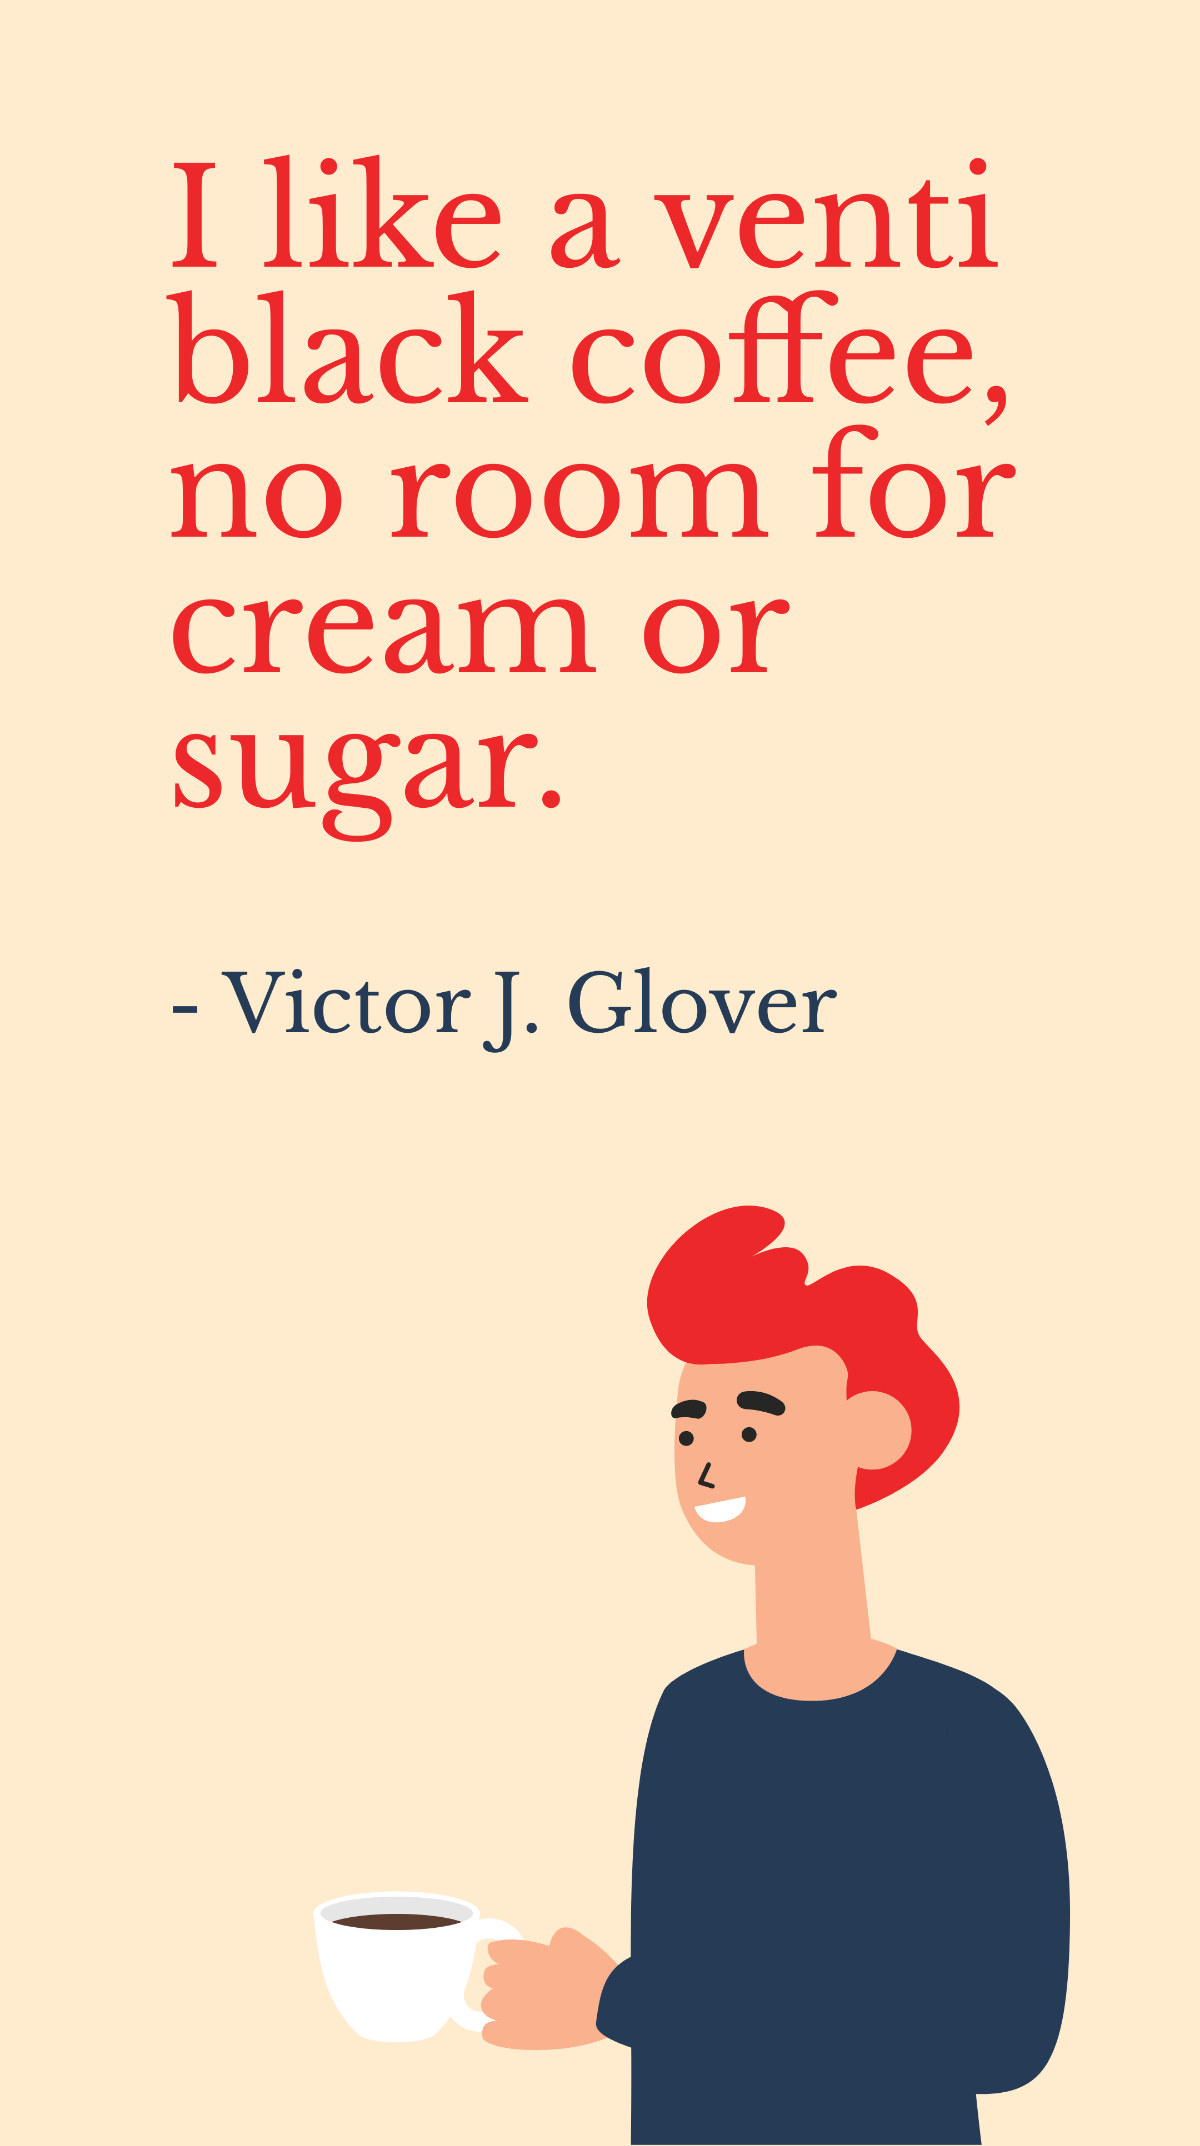 Victor J. Glover - I like a venti black coffee, no room for cream or sugar.